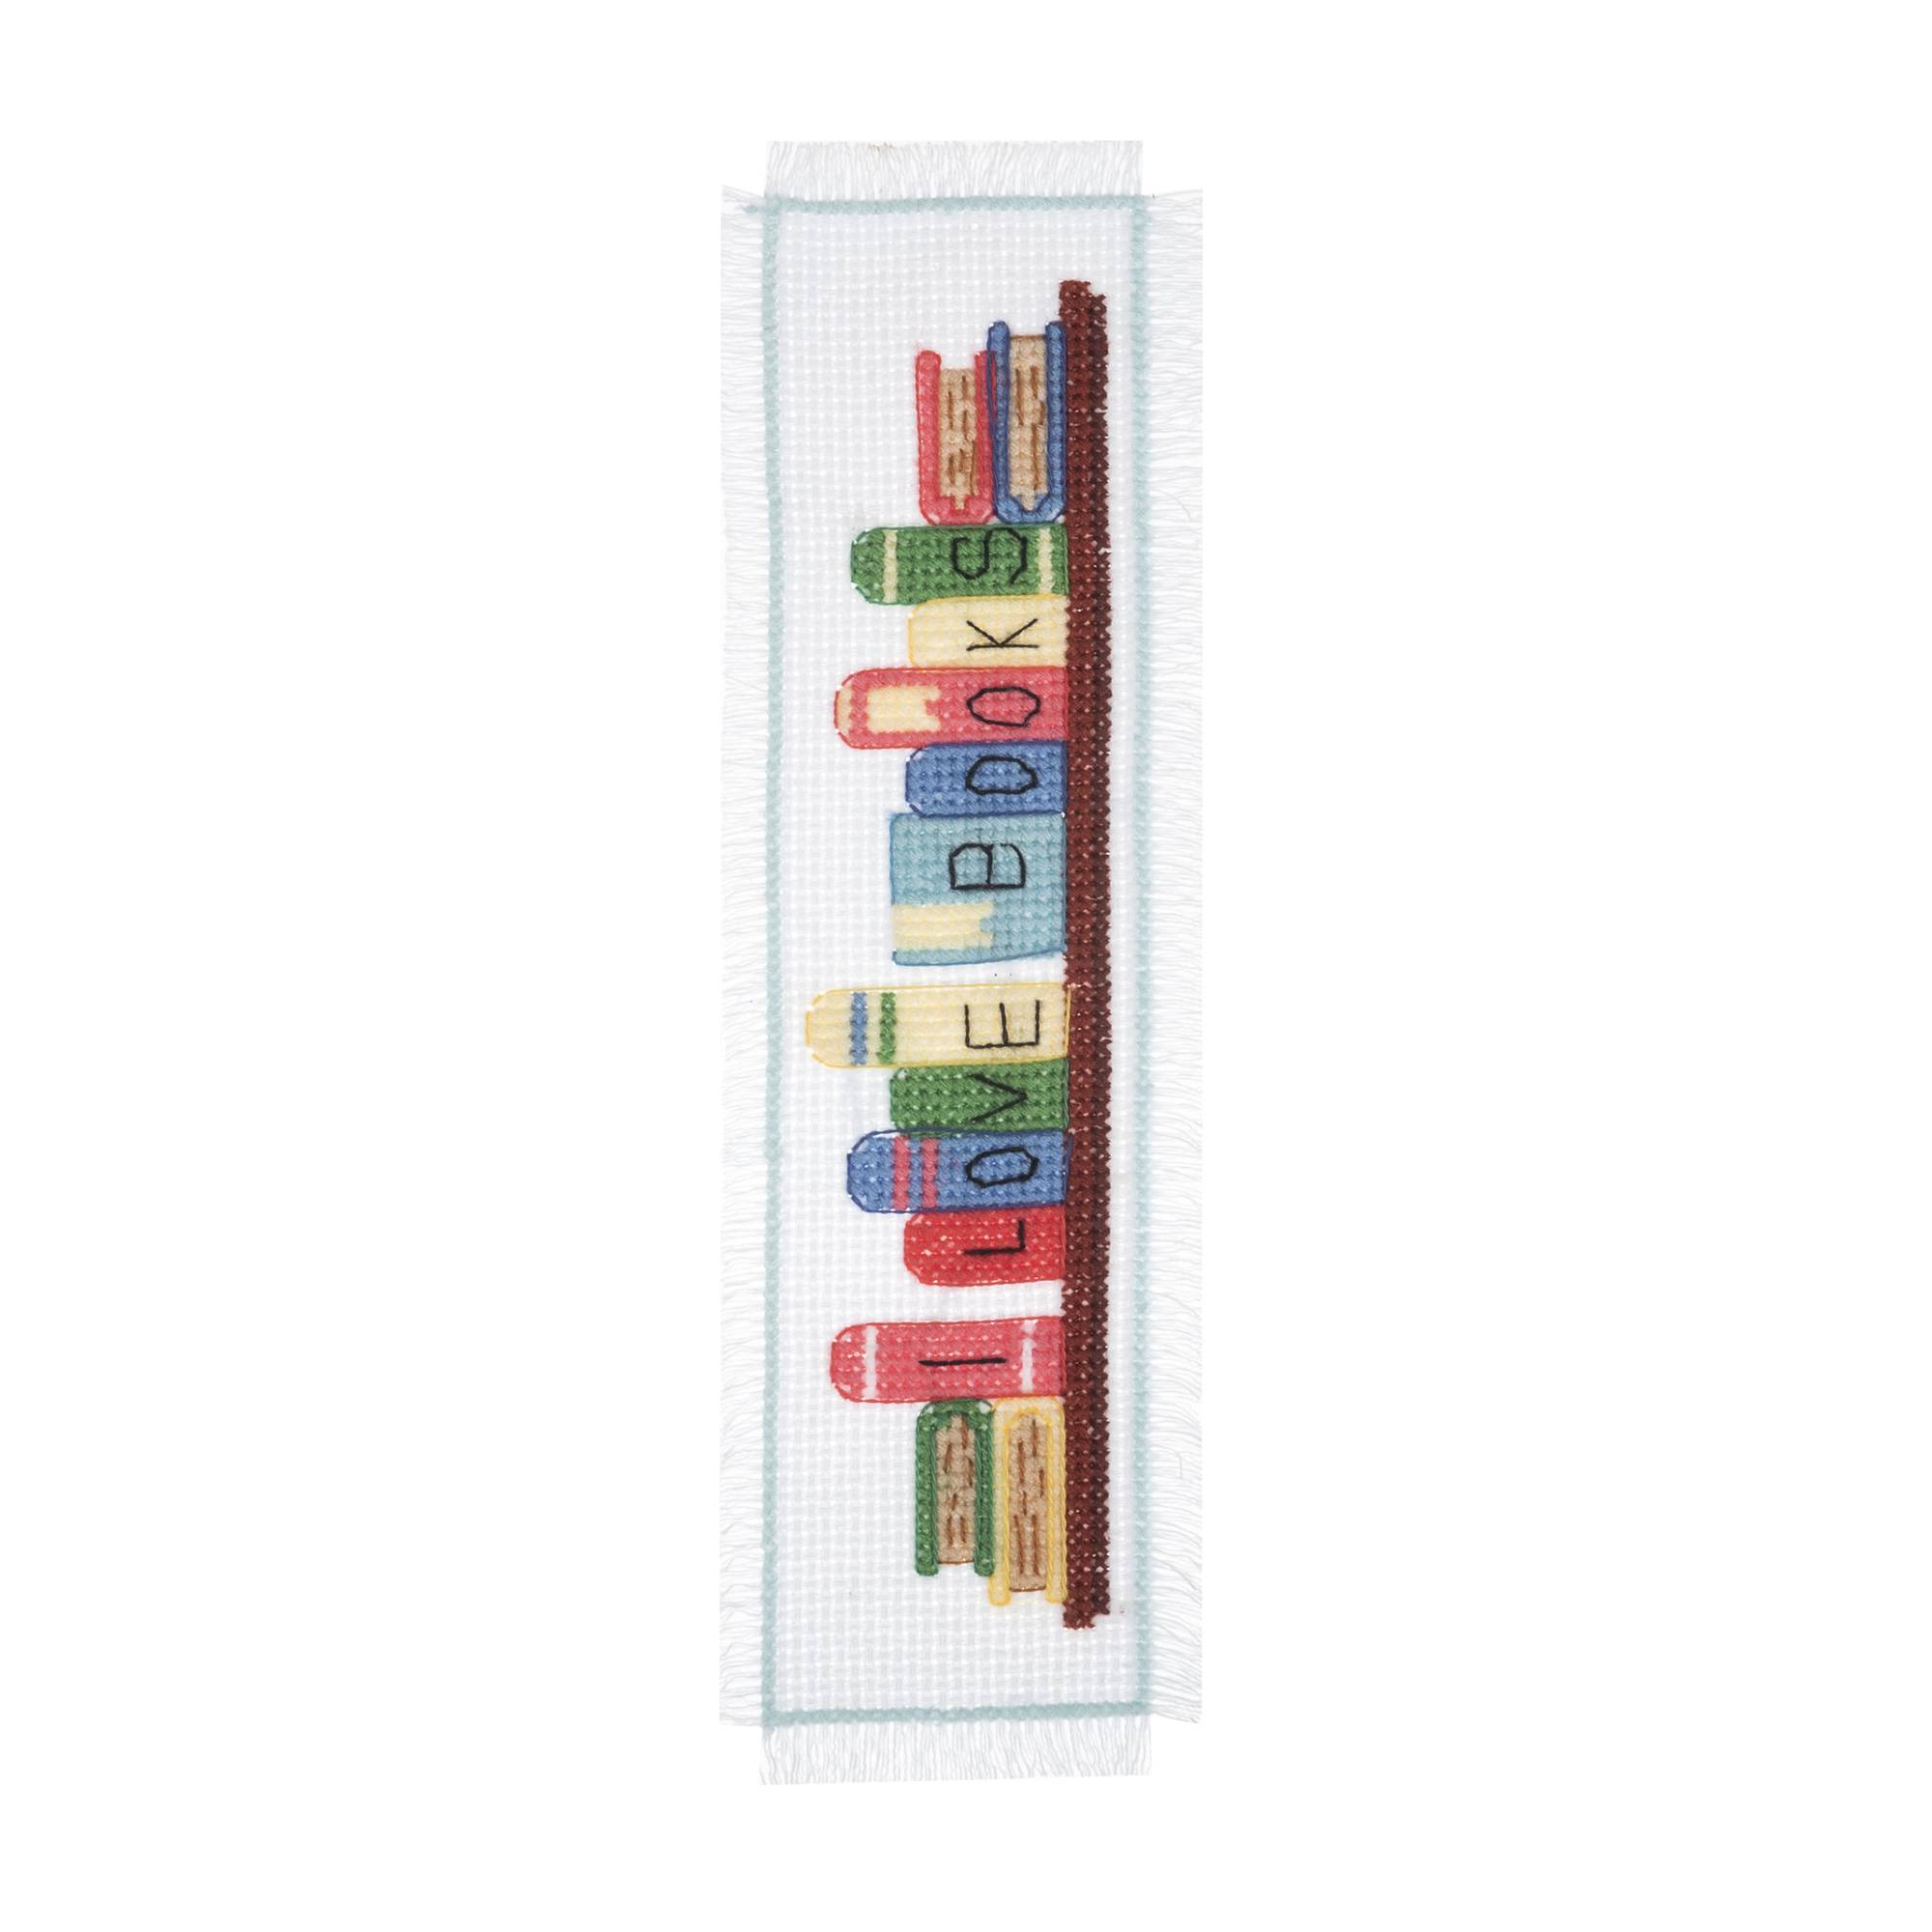 Trimits I Love Books Cross Stitch Bookmark Kit